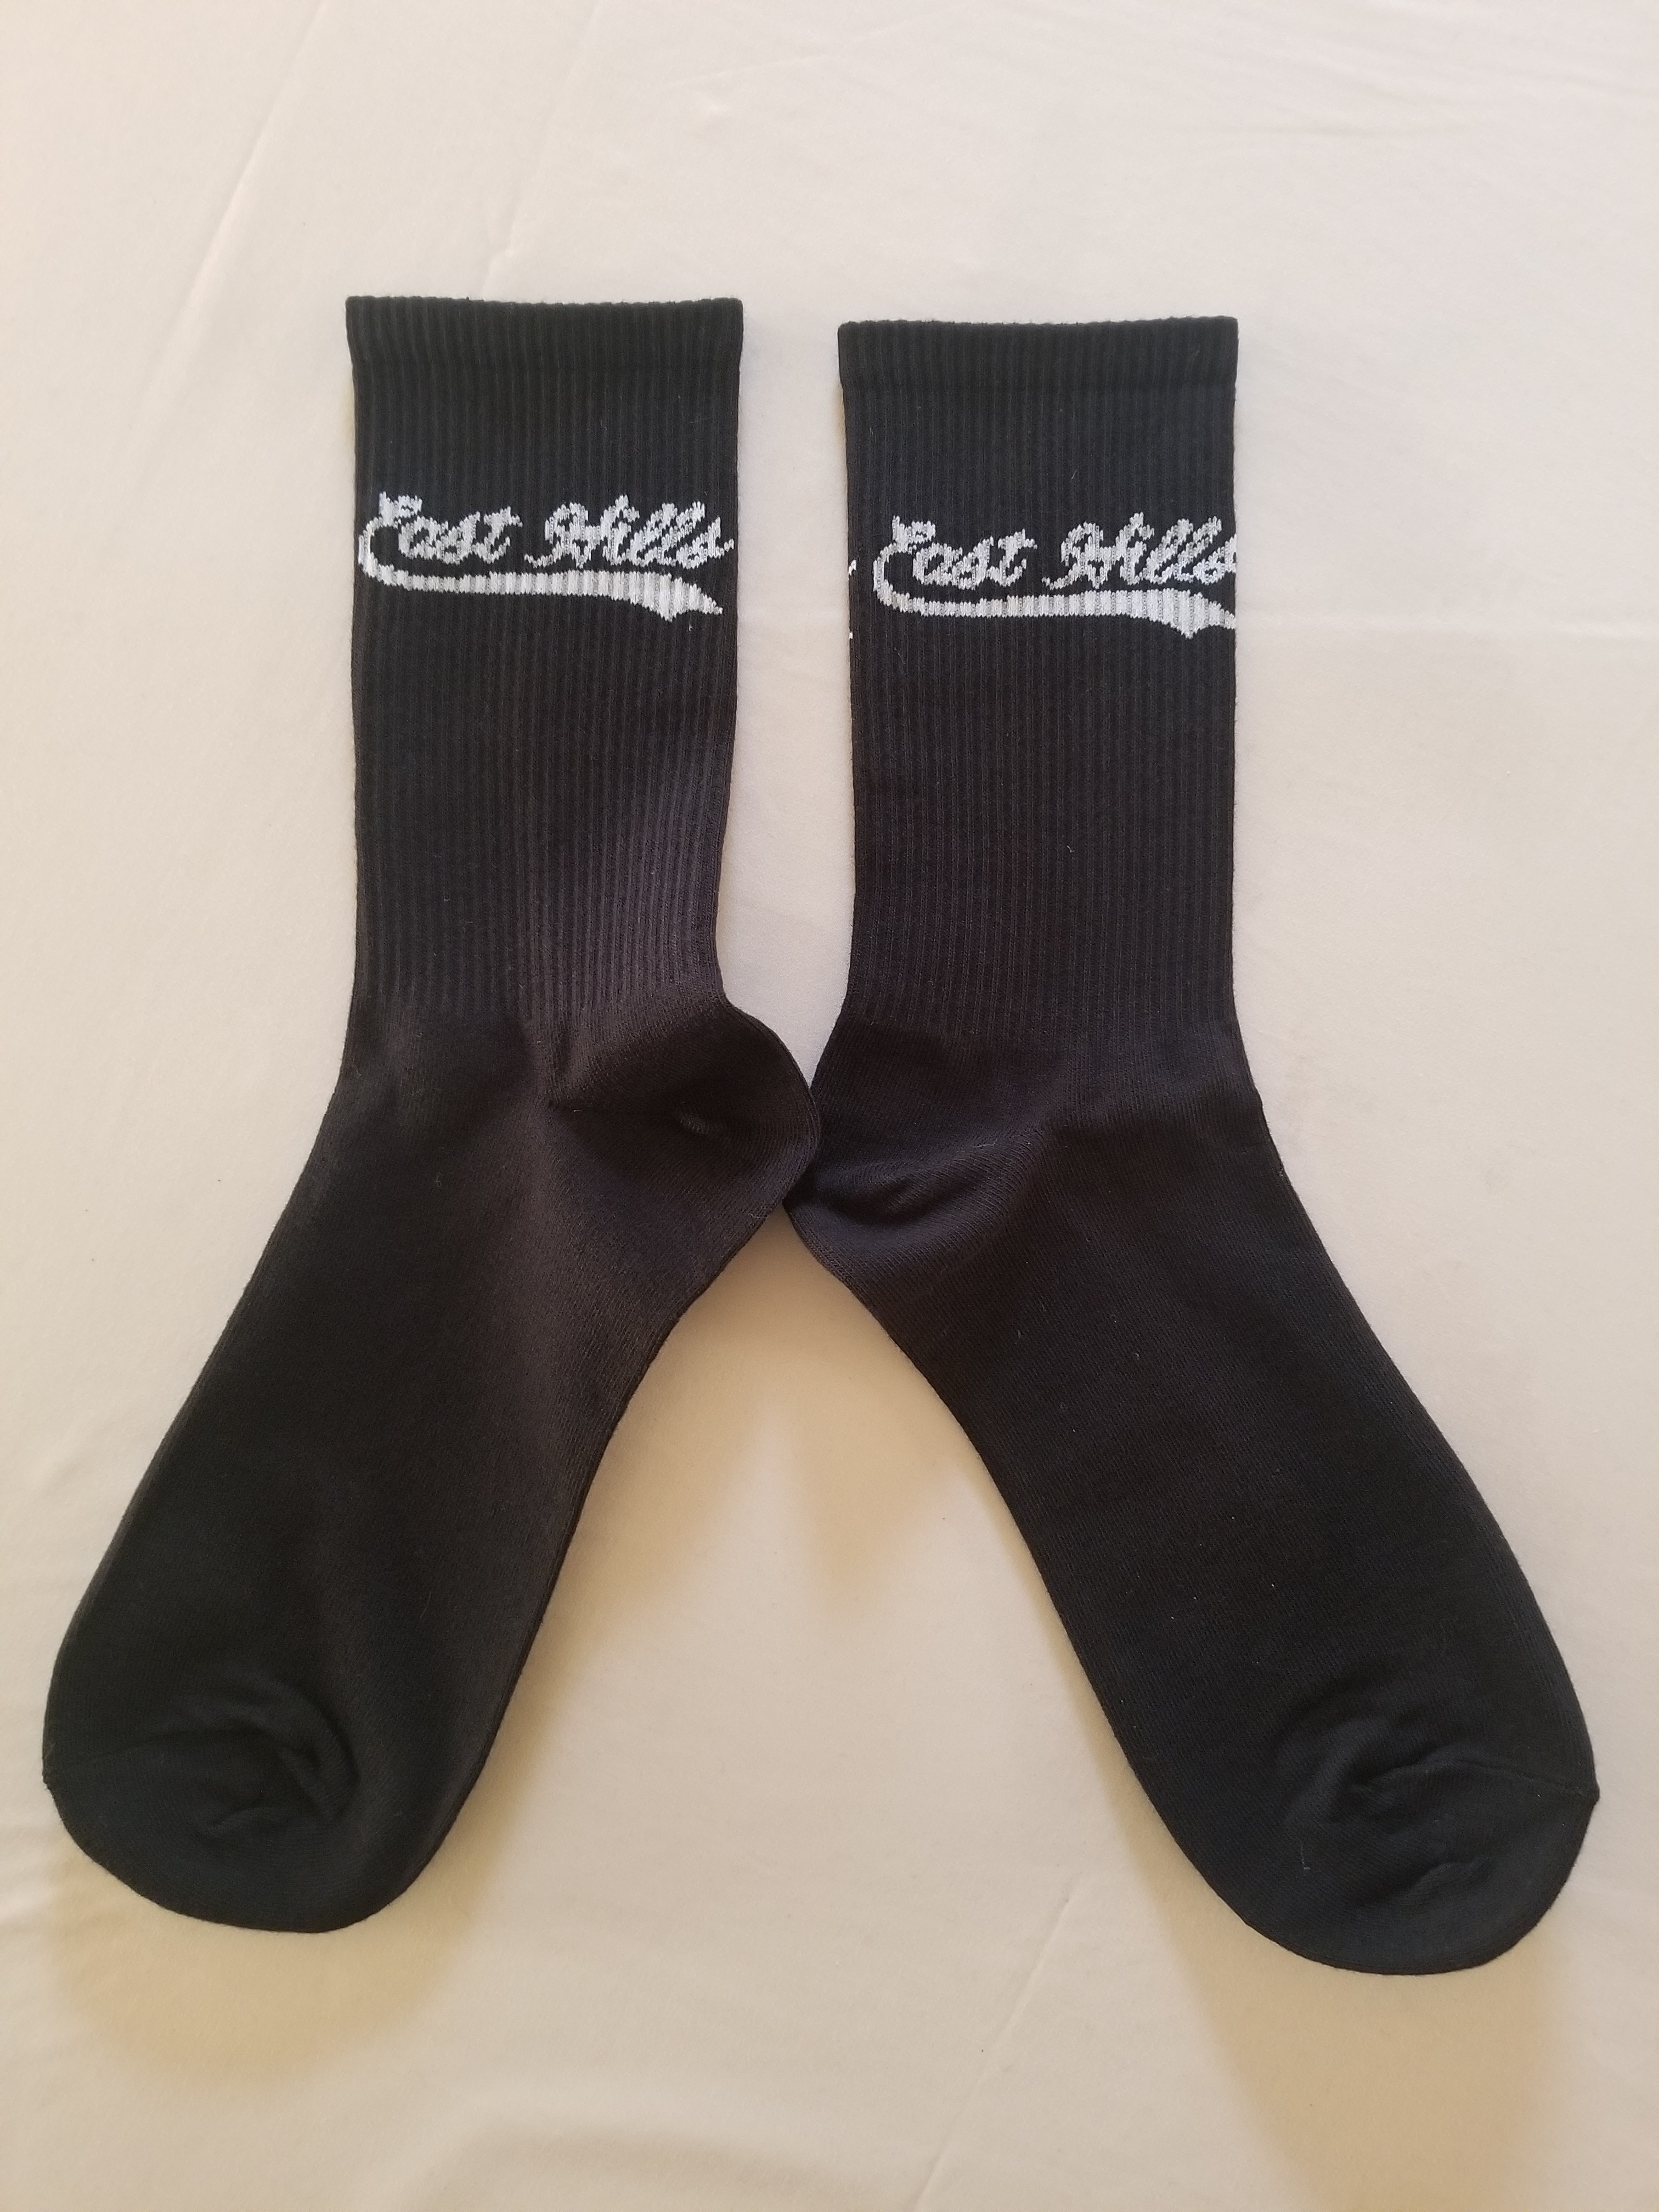 Socks | East Hills Brand Clothing & Apparel